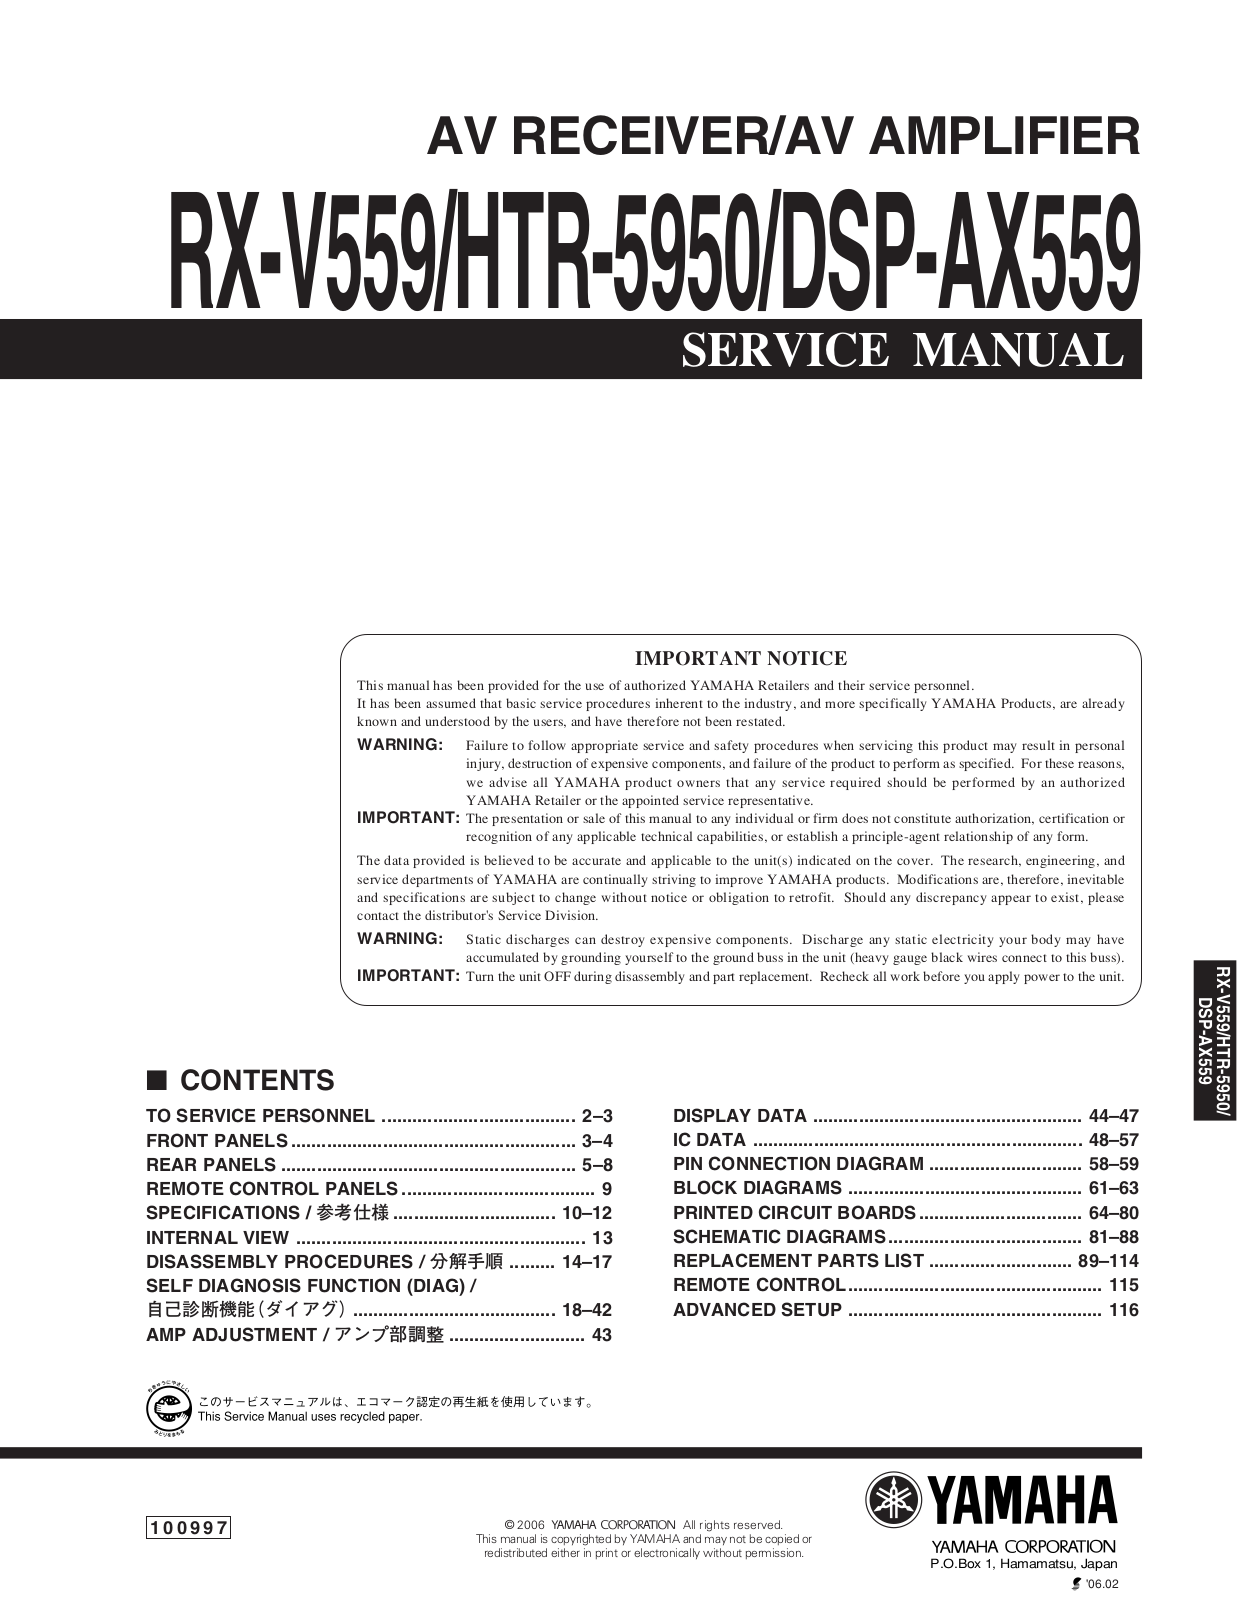 Yamaha DSPAX-559 Service manual